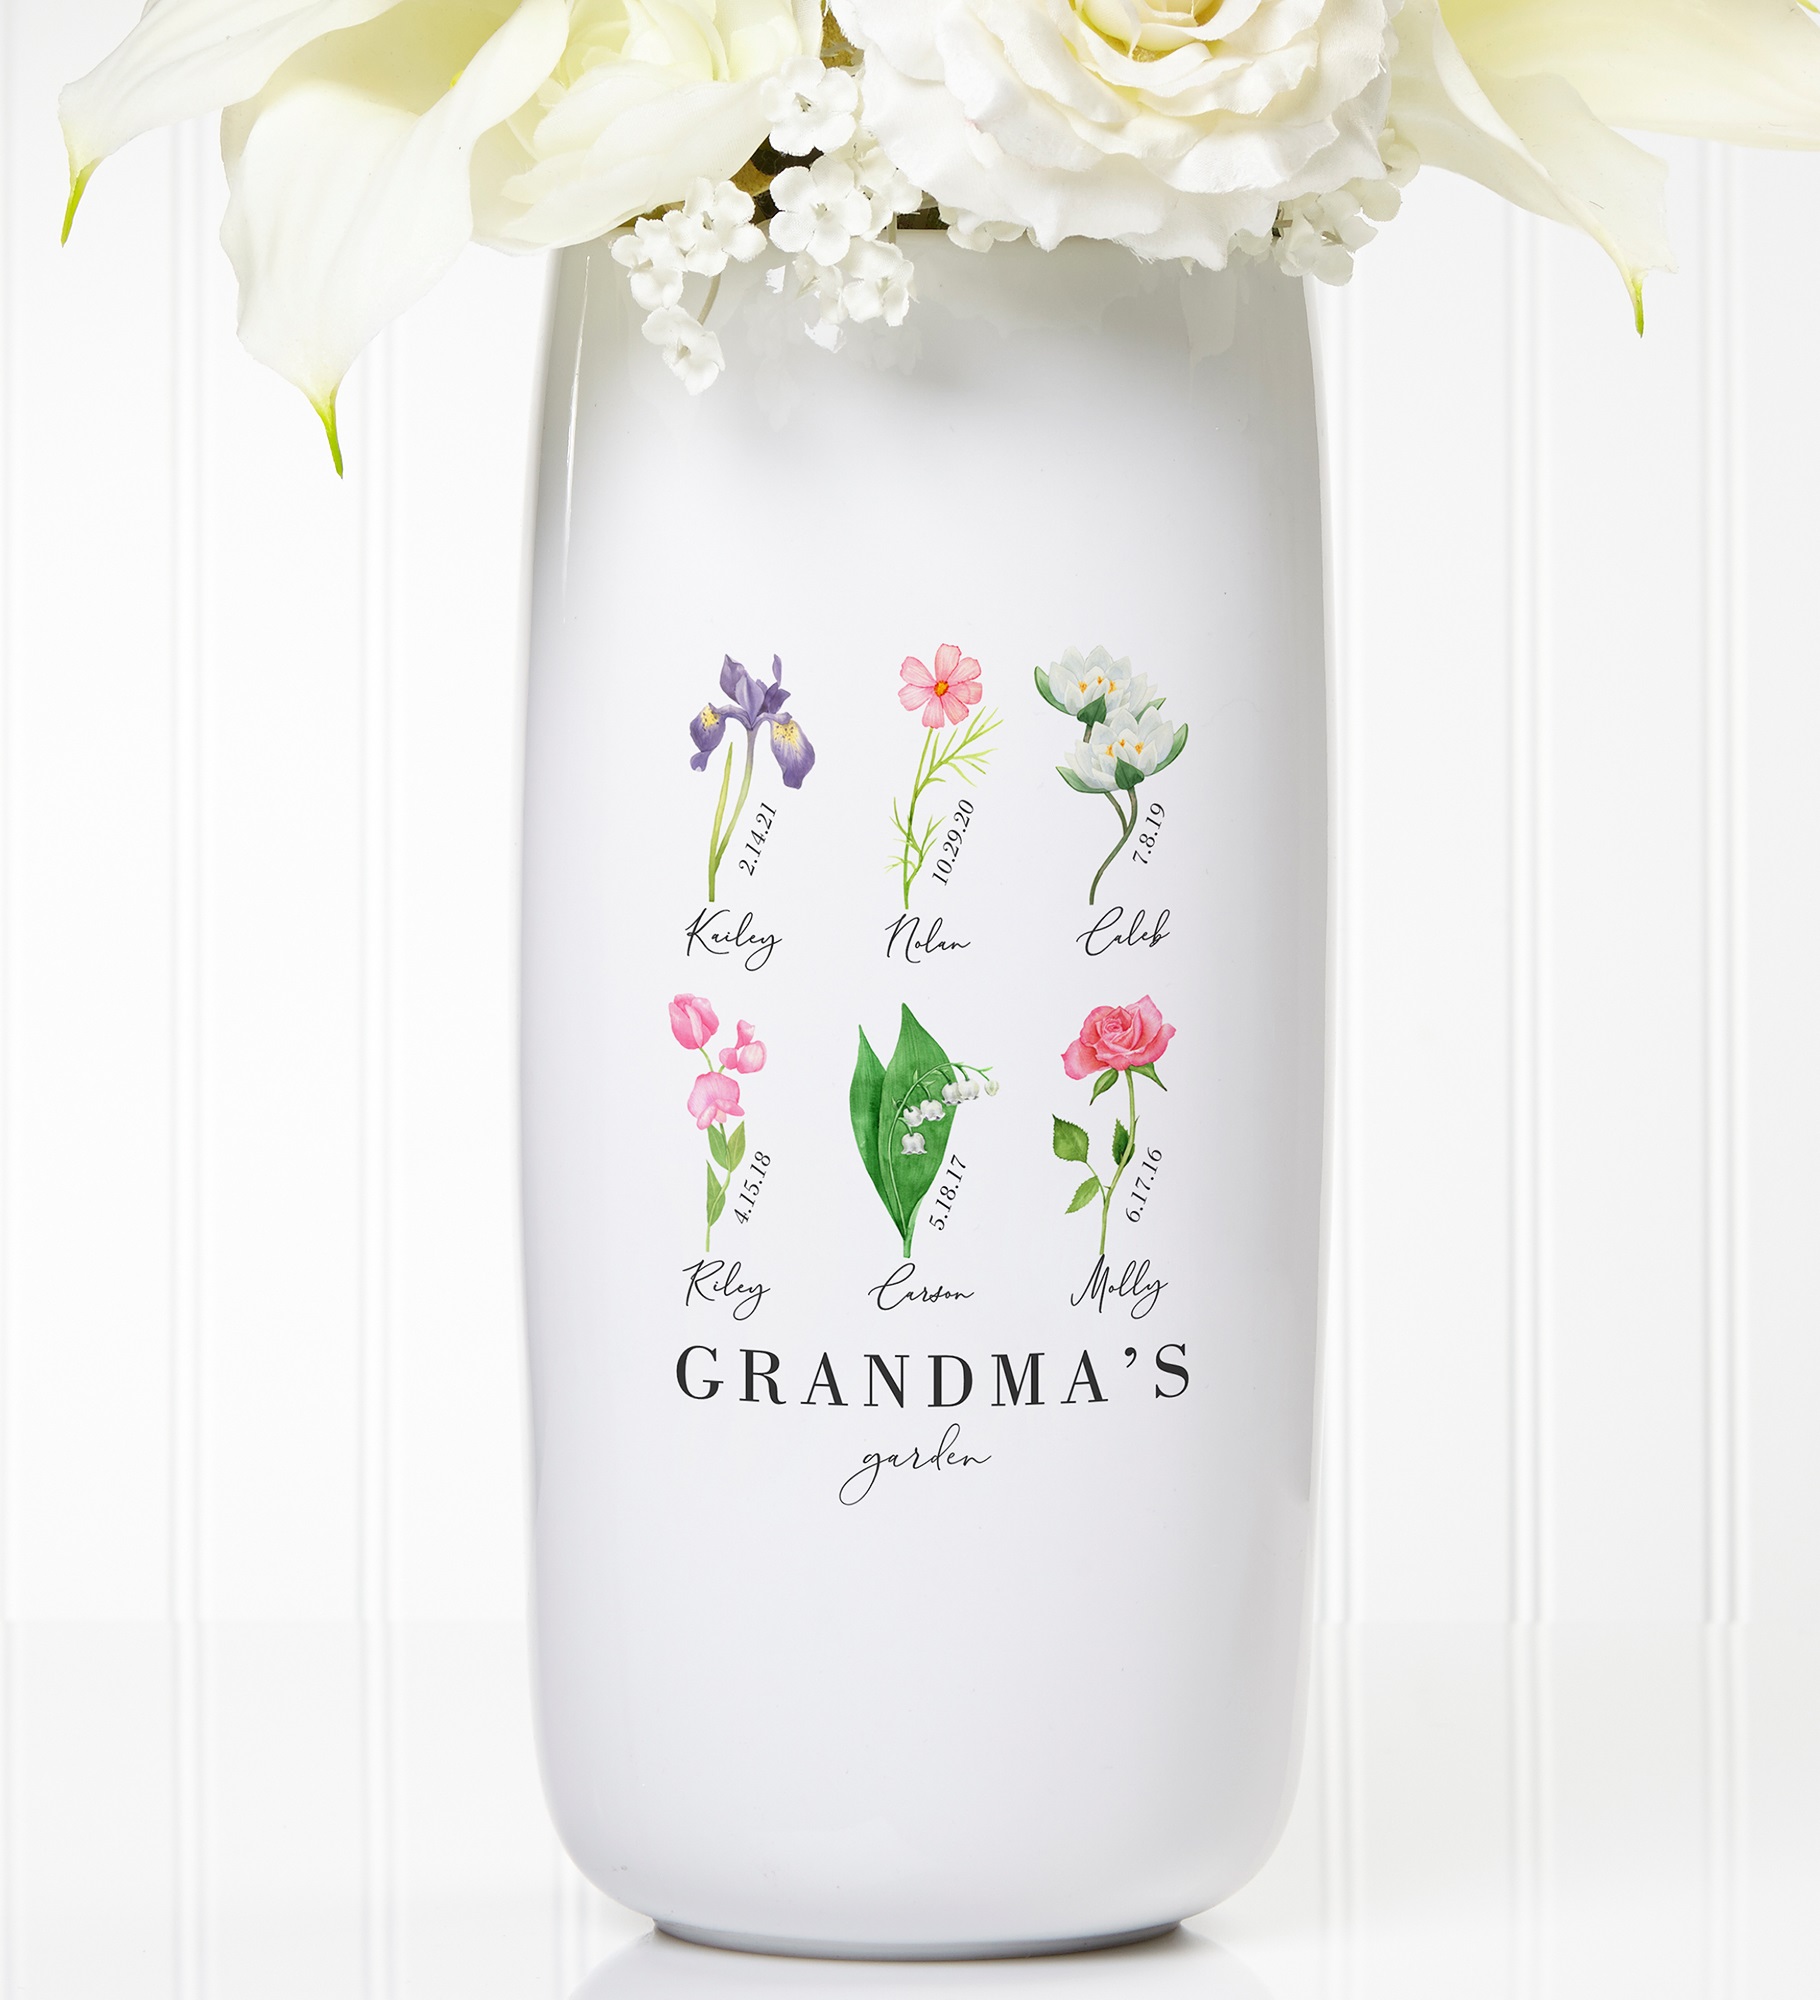 Birth Month Flower Personalized Ceramic Vase